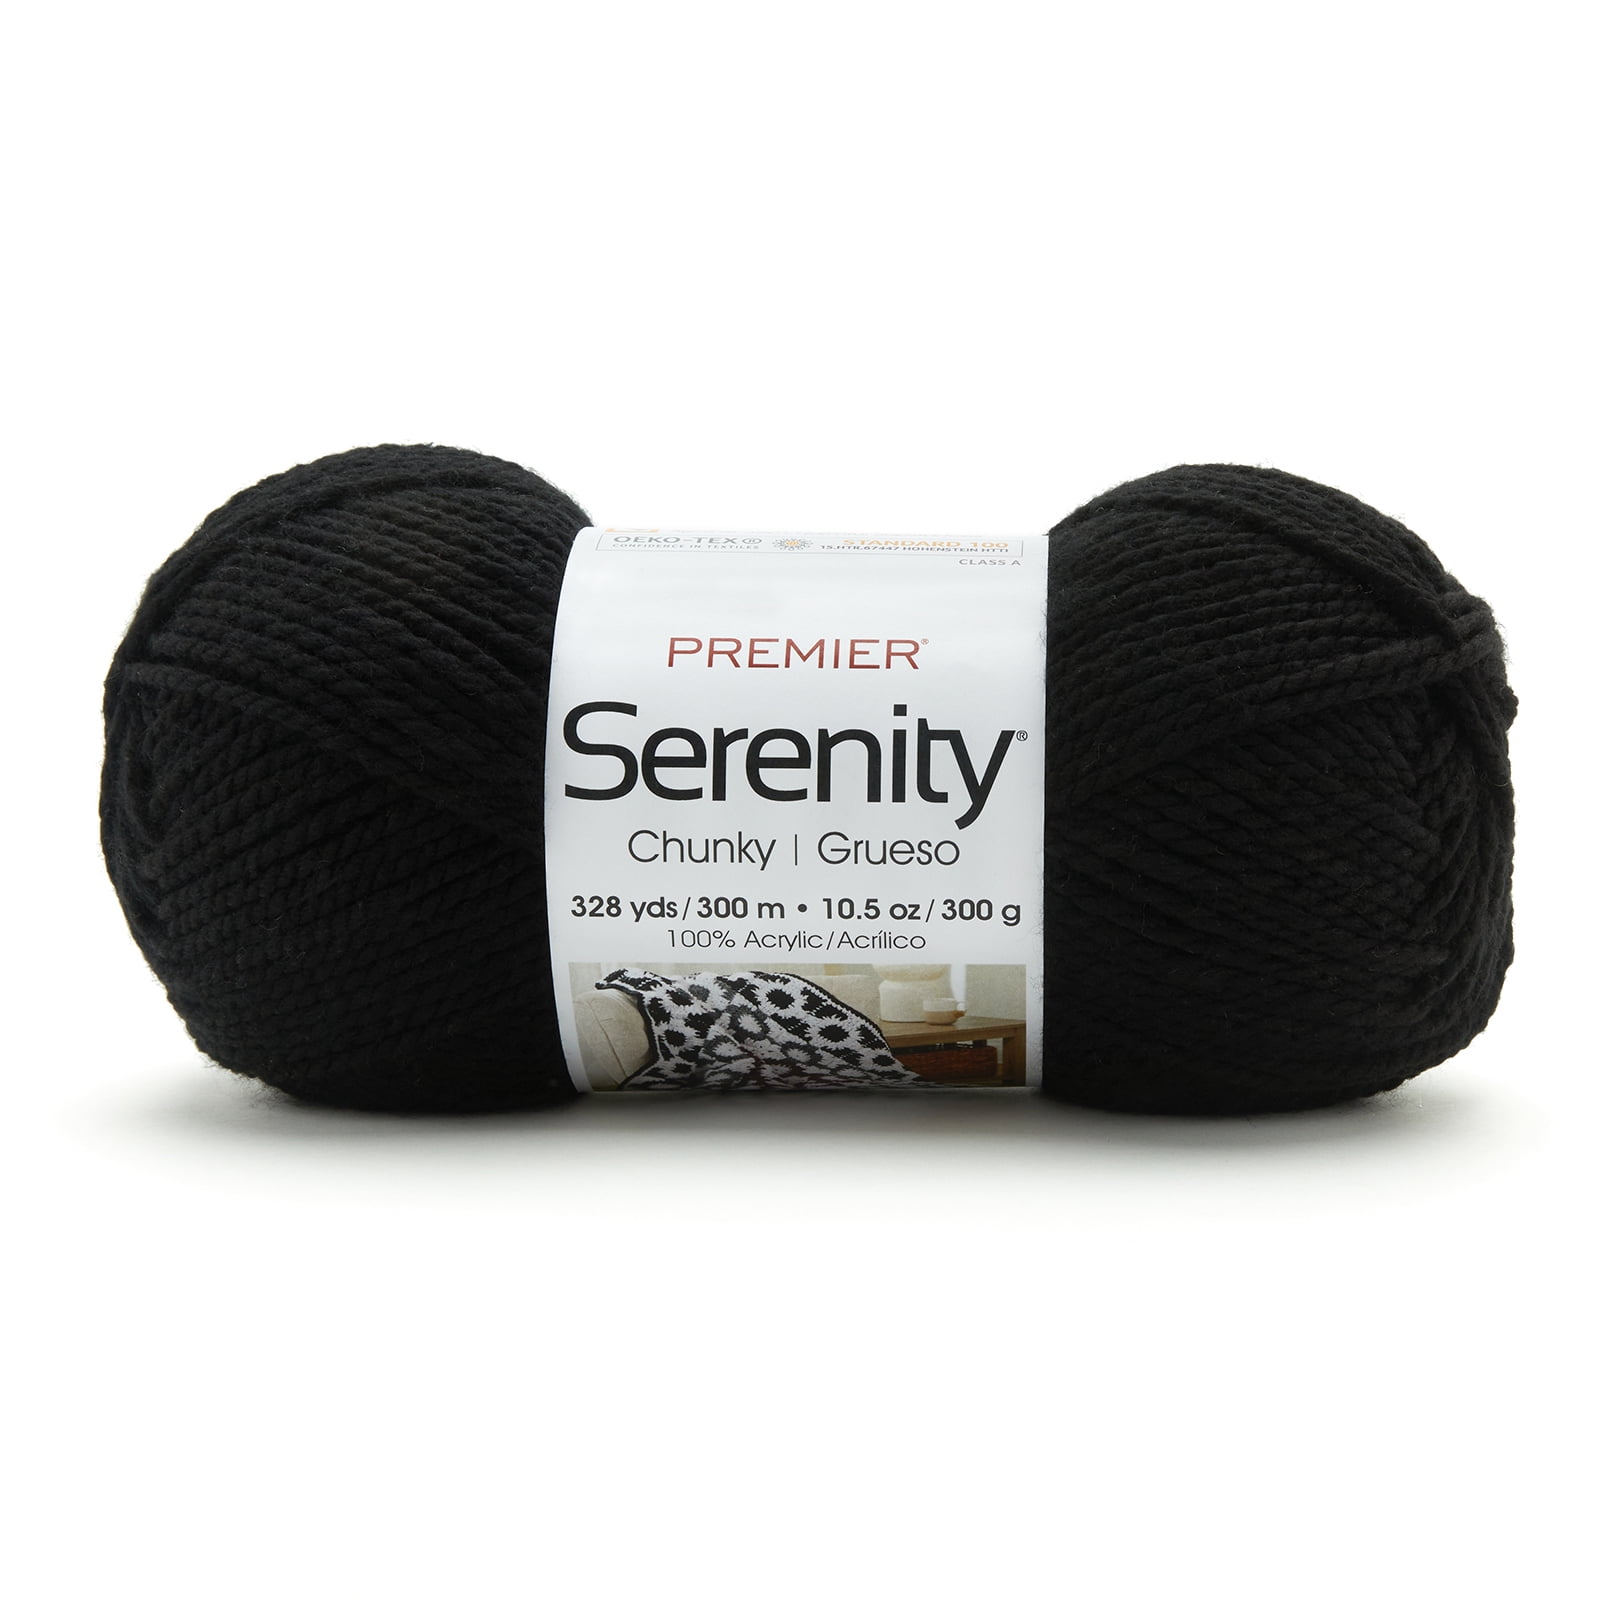  3x60g Black Yarn for Crocheting and Knitting;3x66m